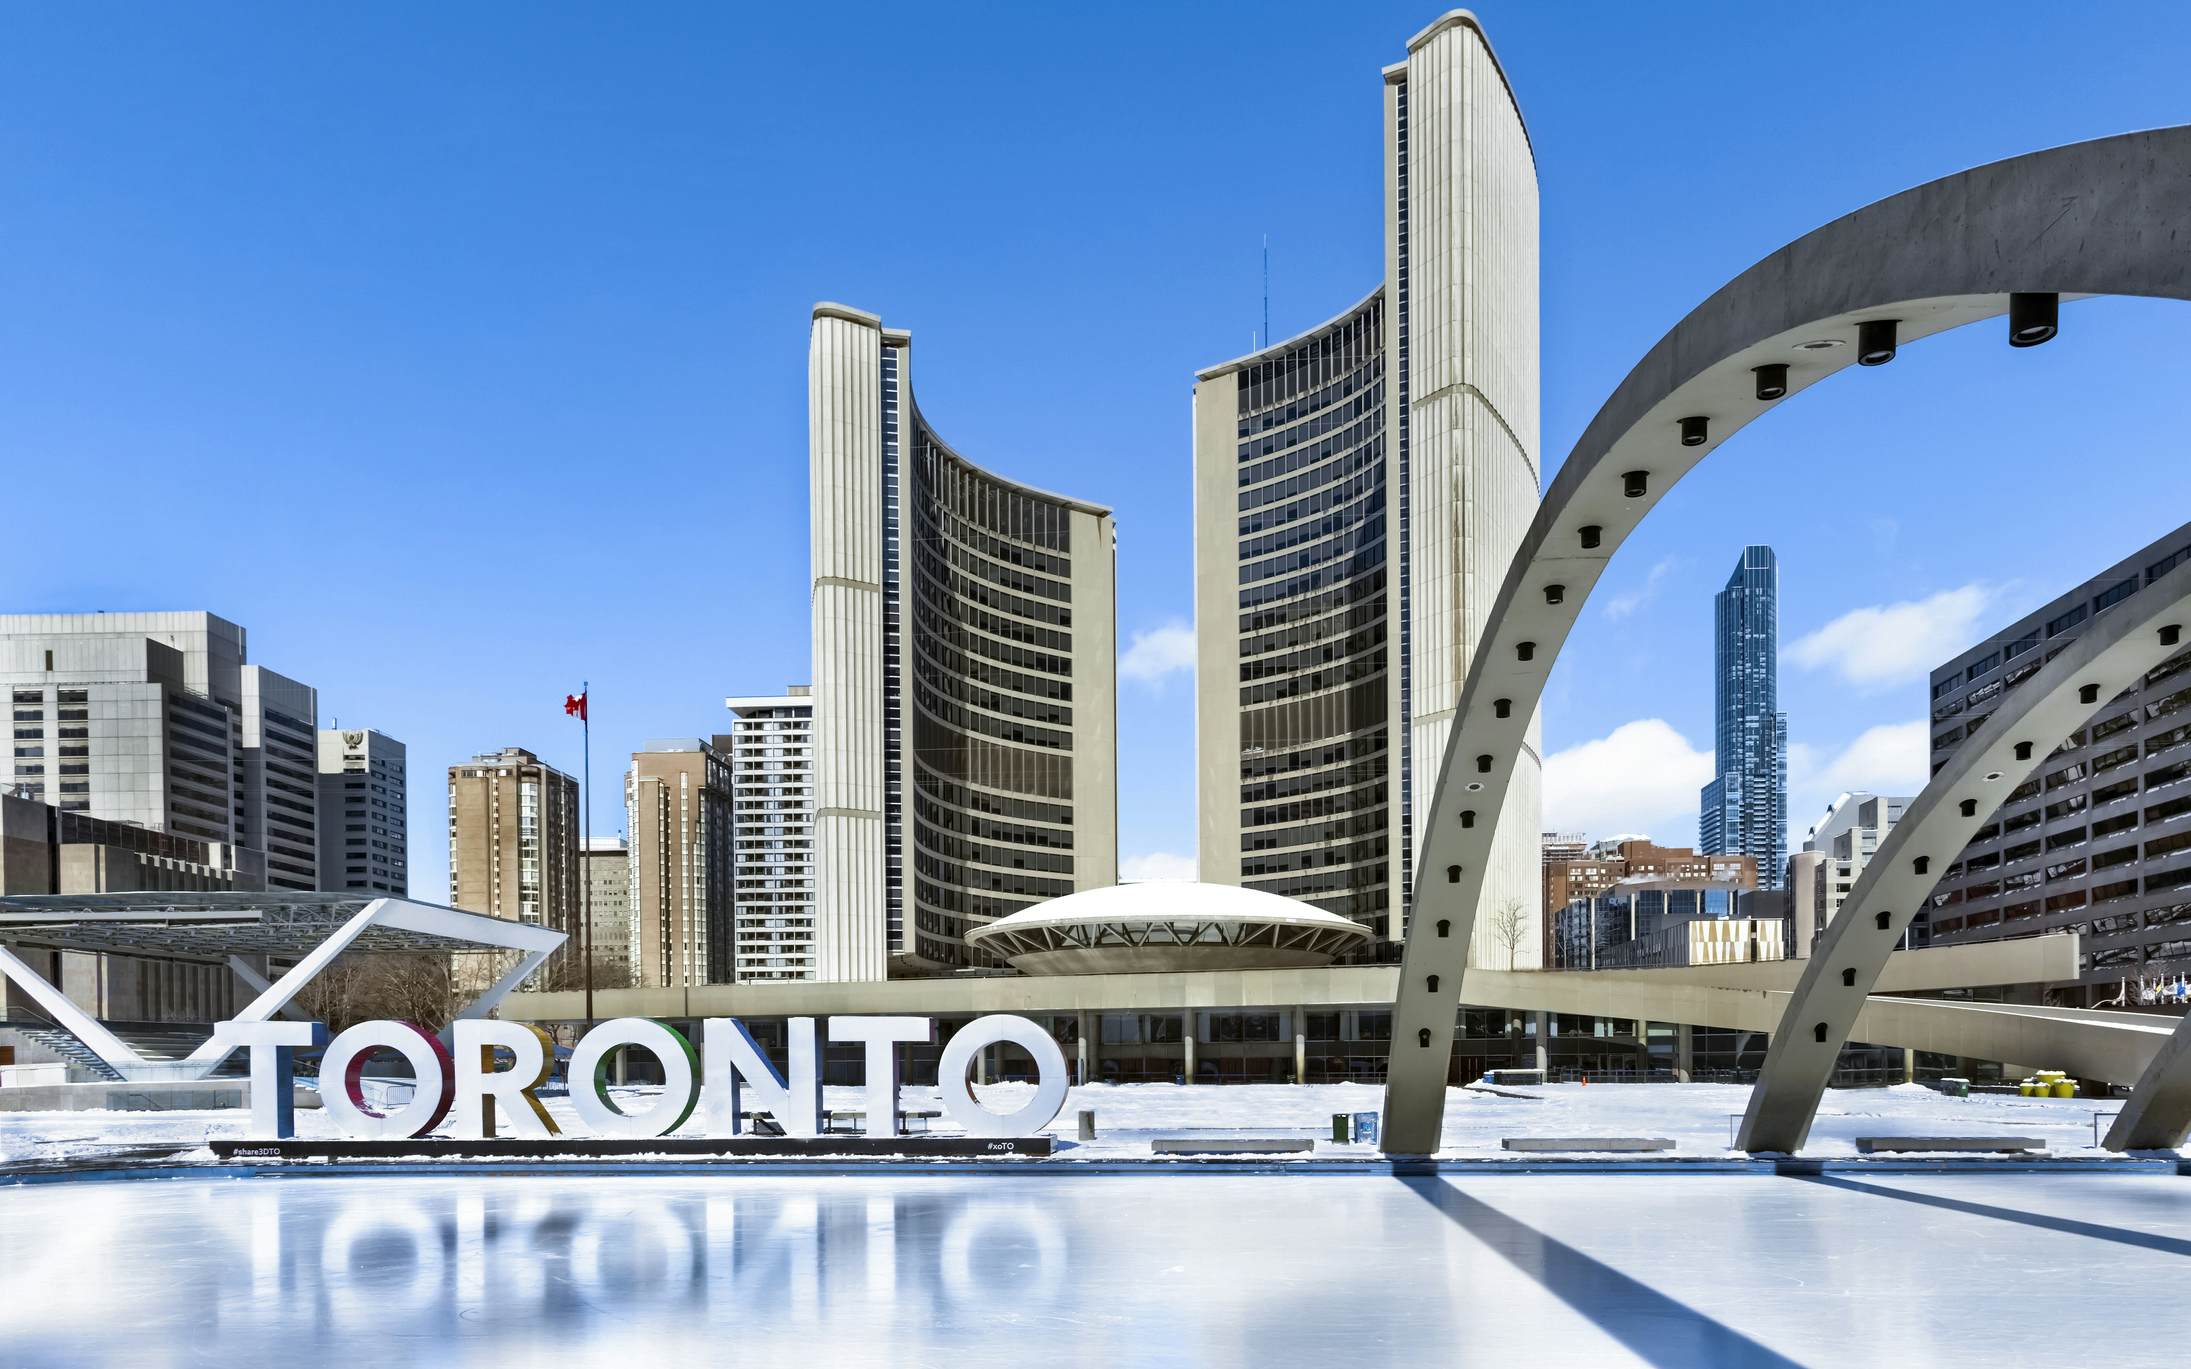 Toronto 3d sign image